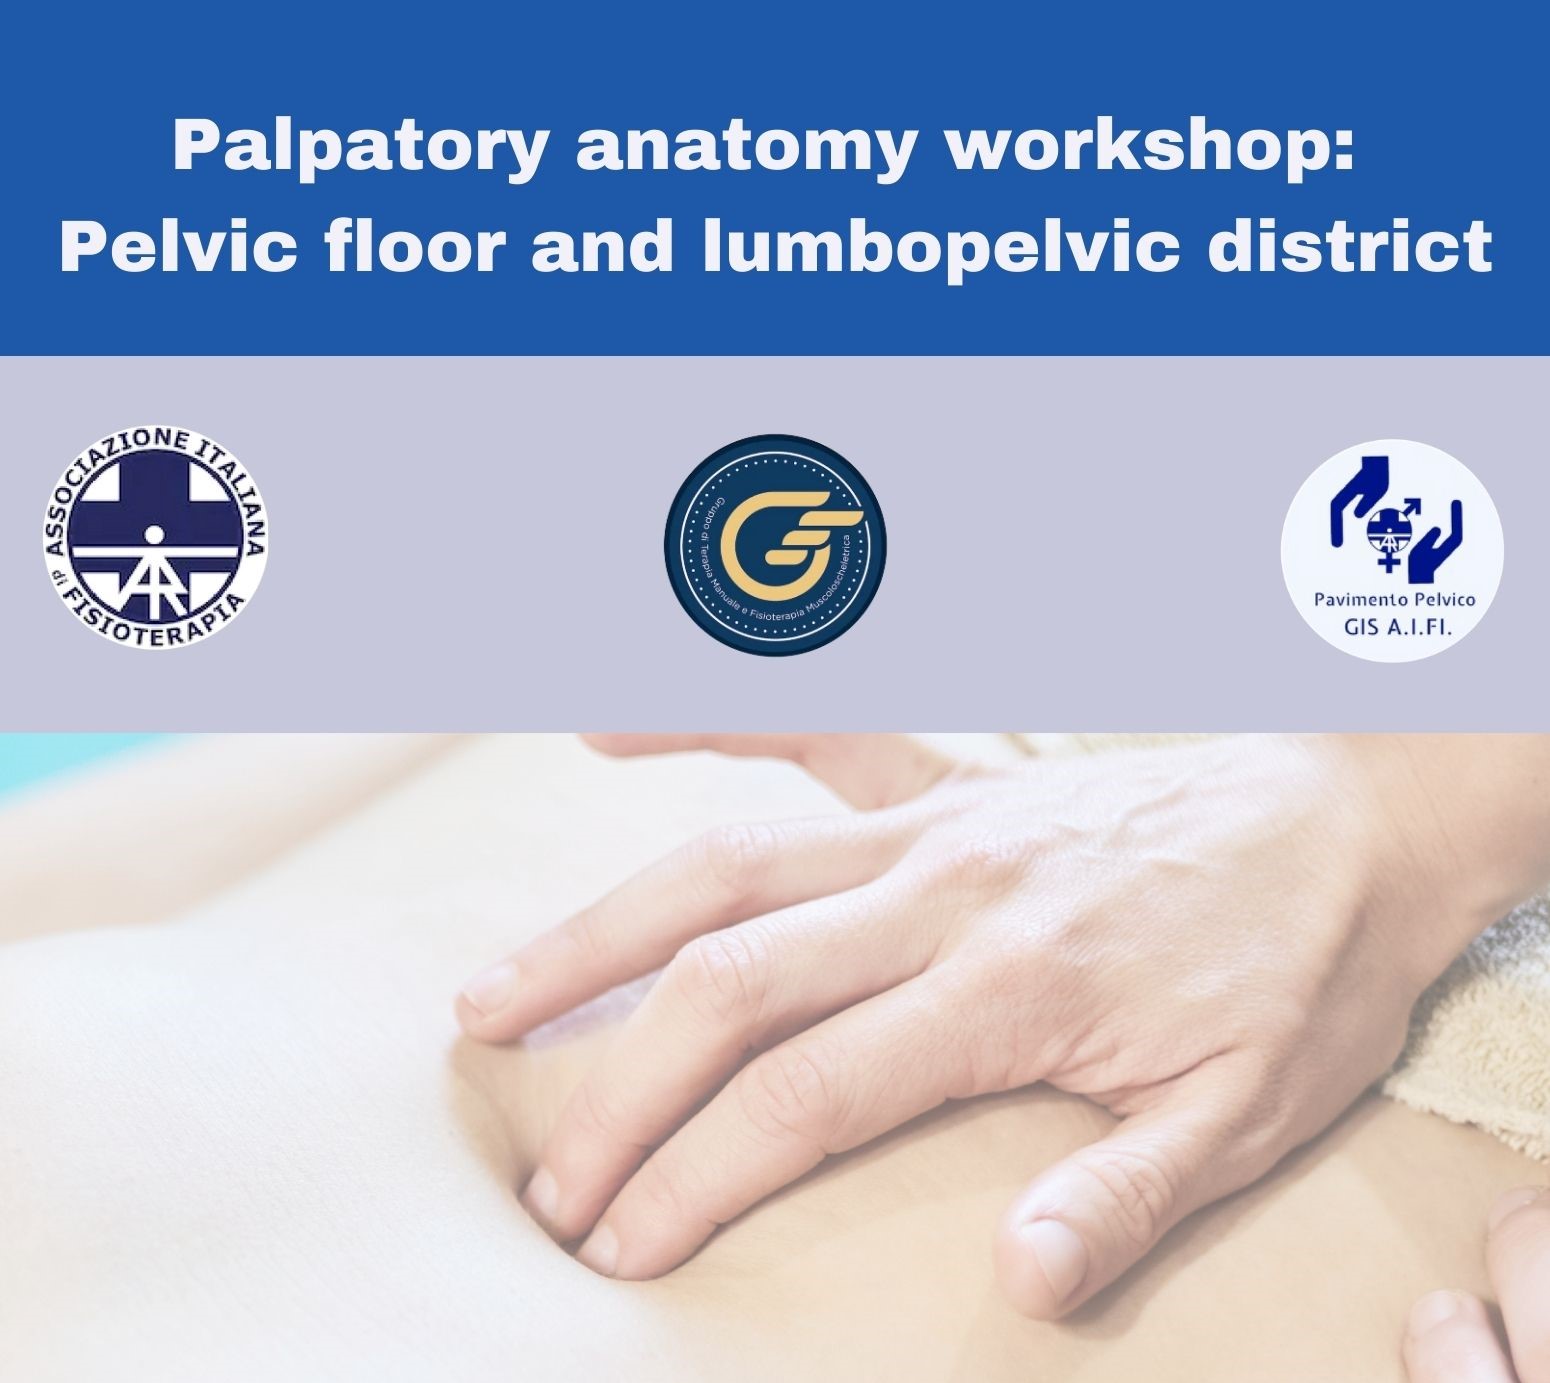 anatomia palpatoria,pavimento pelvico,terapia manuale,workshop